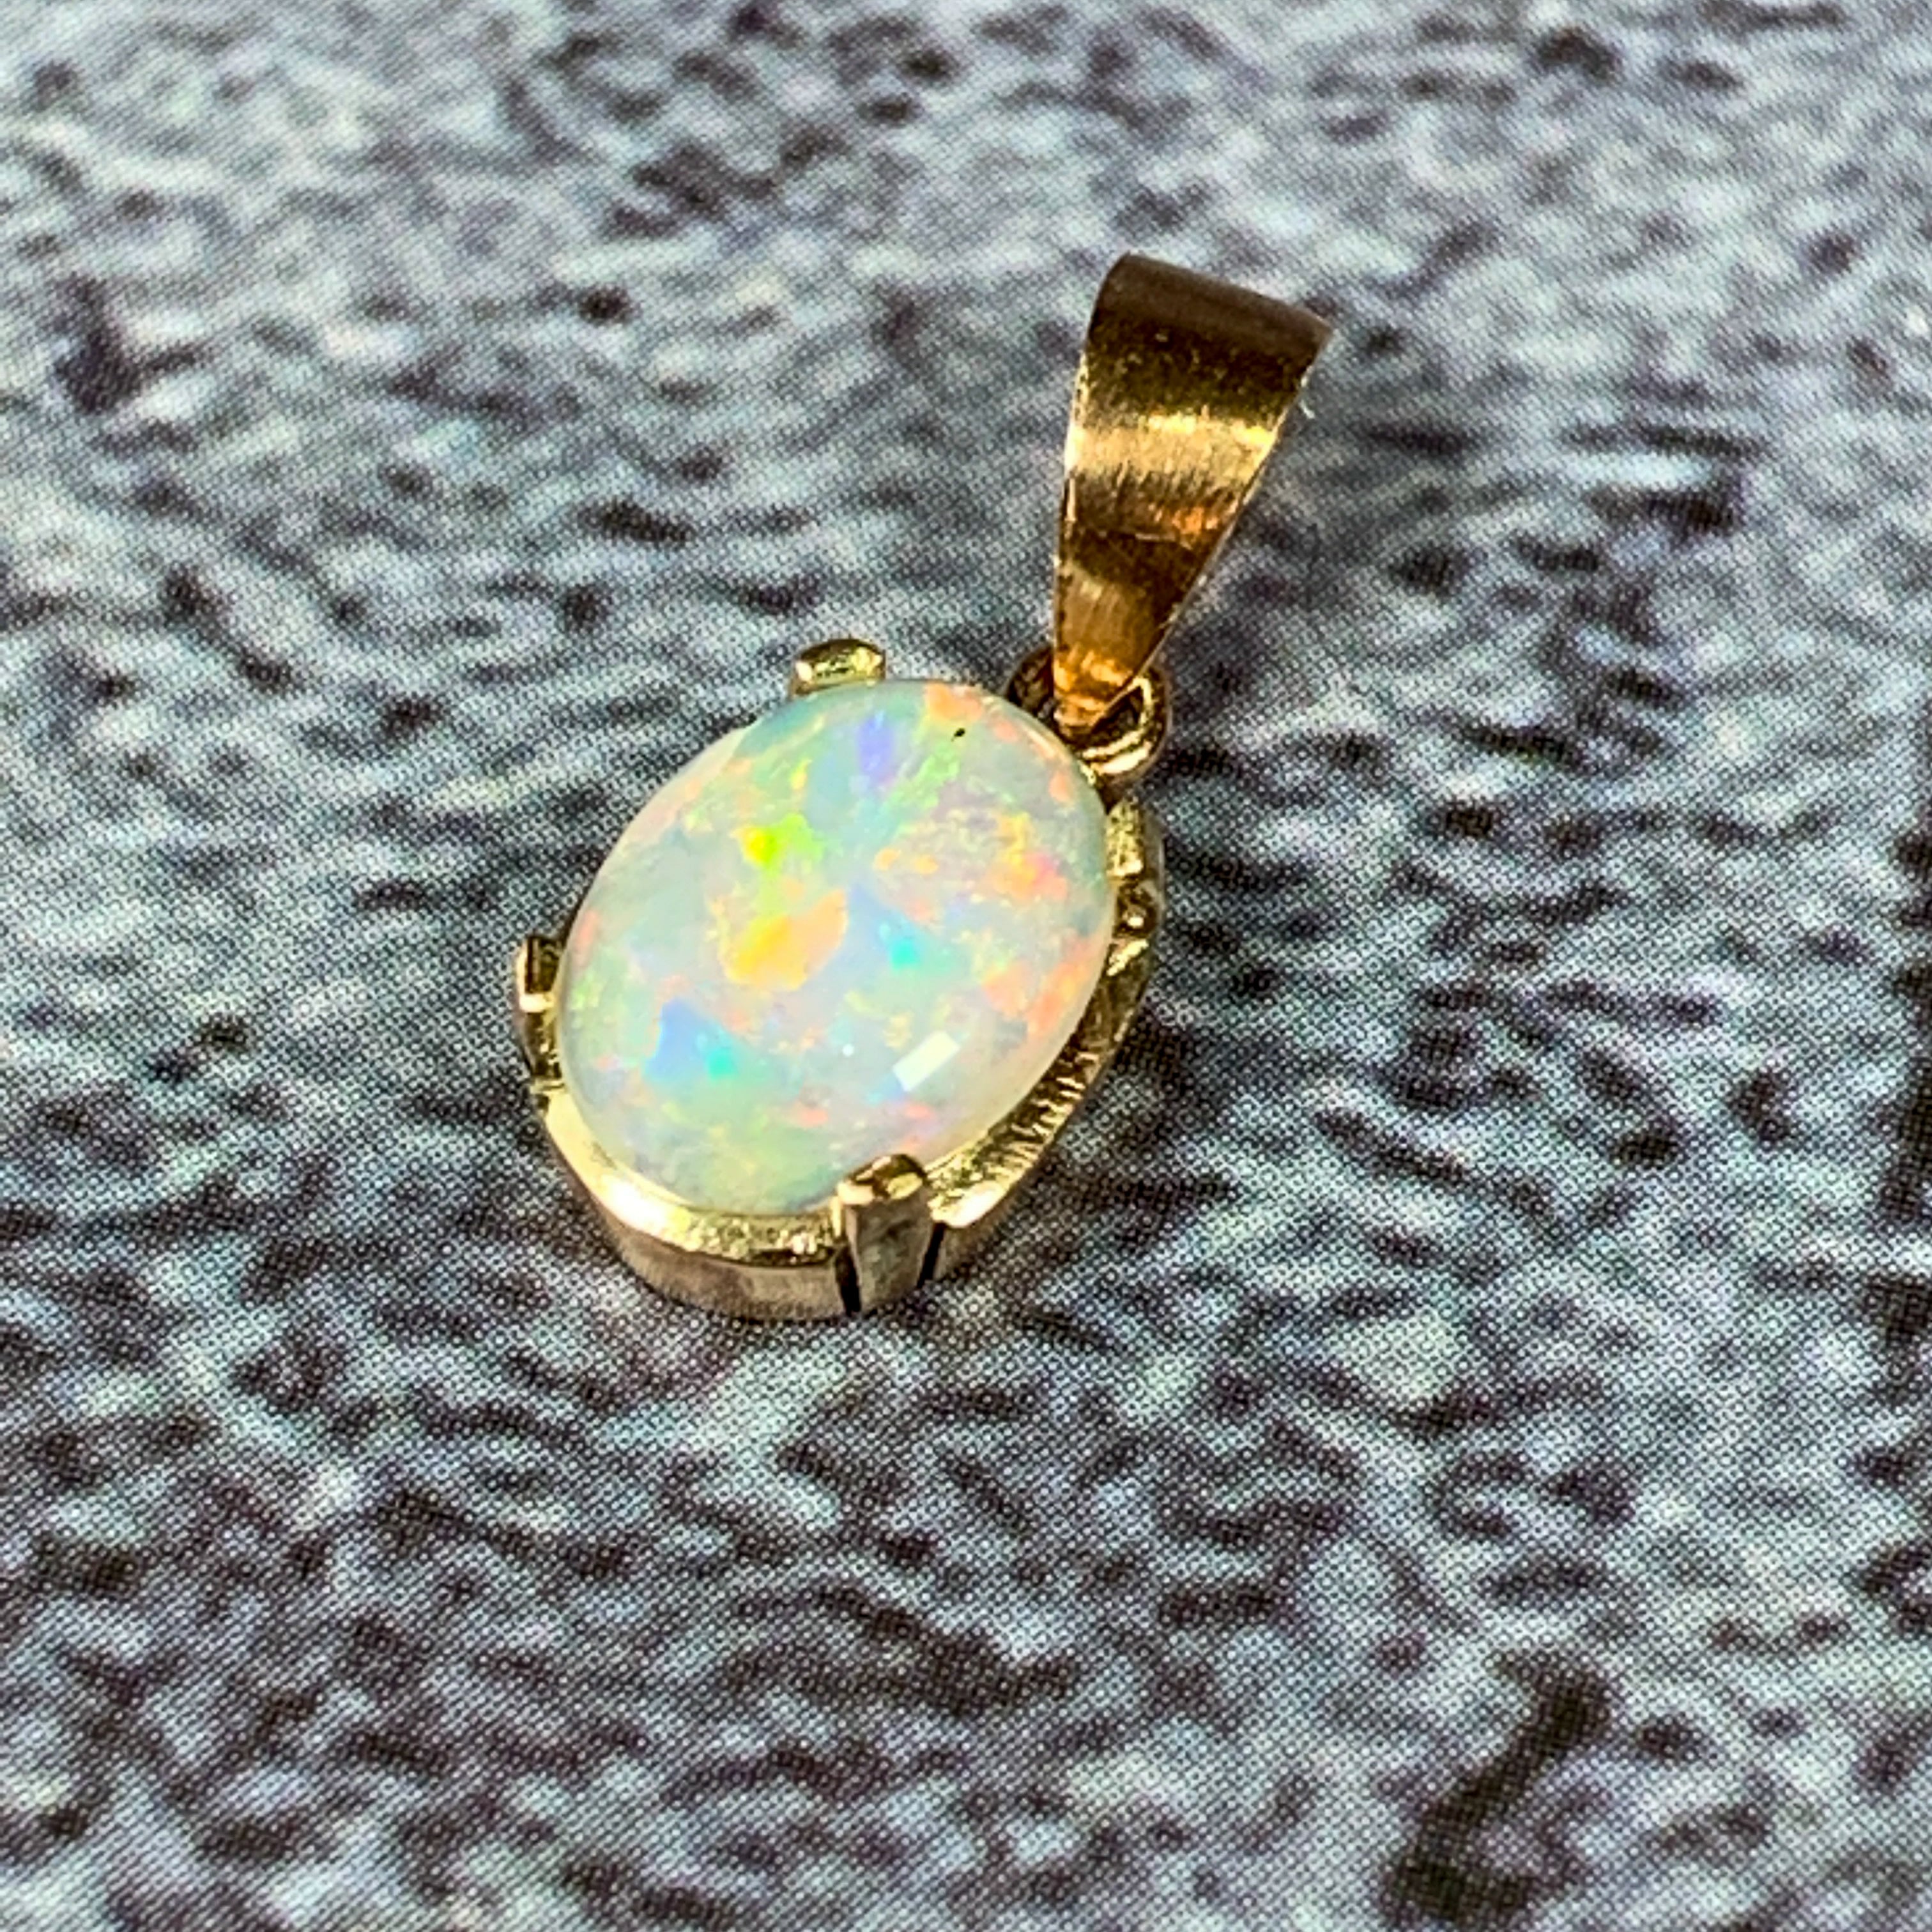 9kt Rose Gold Light Opal 8x6mm pendant - Masterpiece Jewellery Opal & Gems Sydney Australia | Online Shop